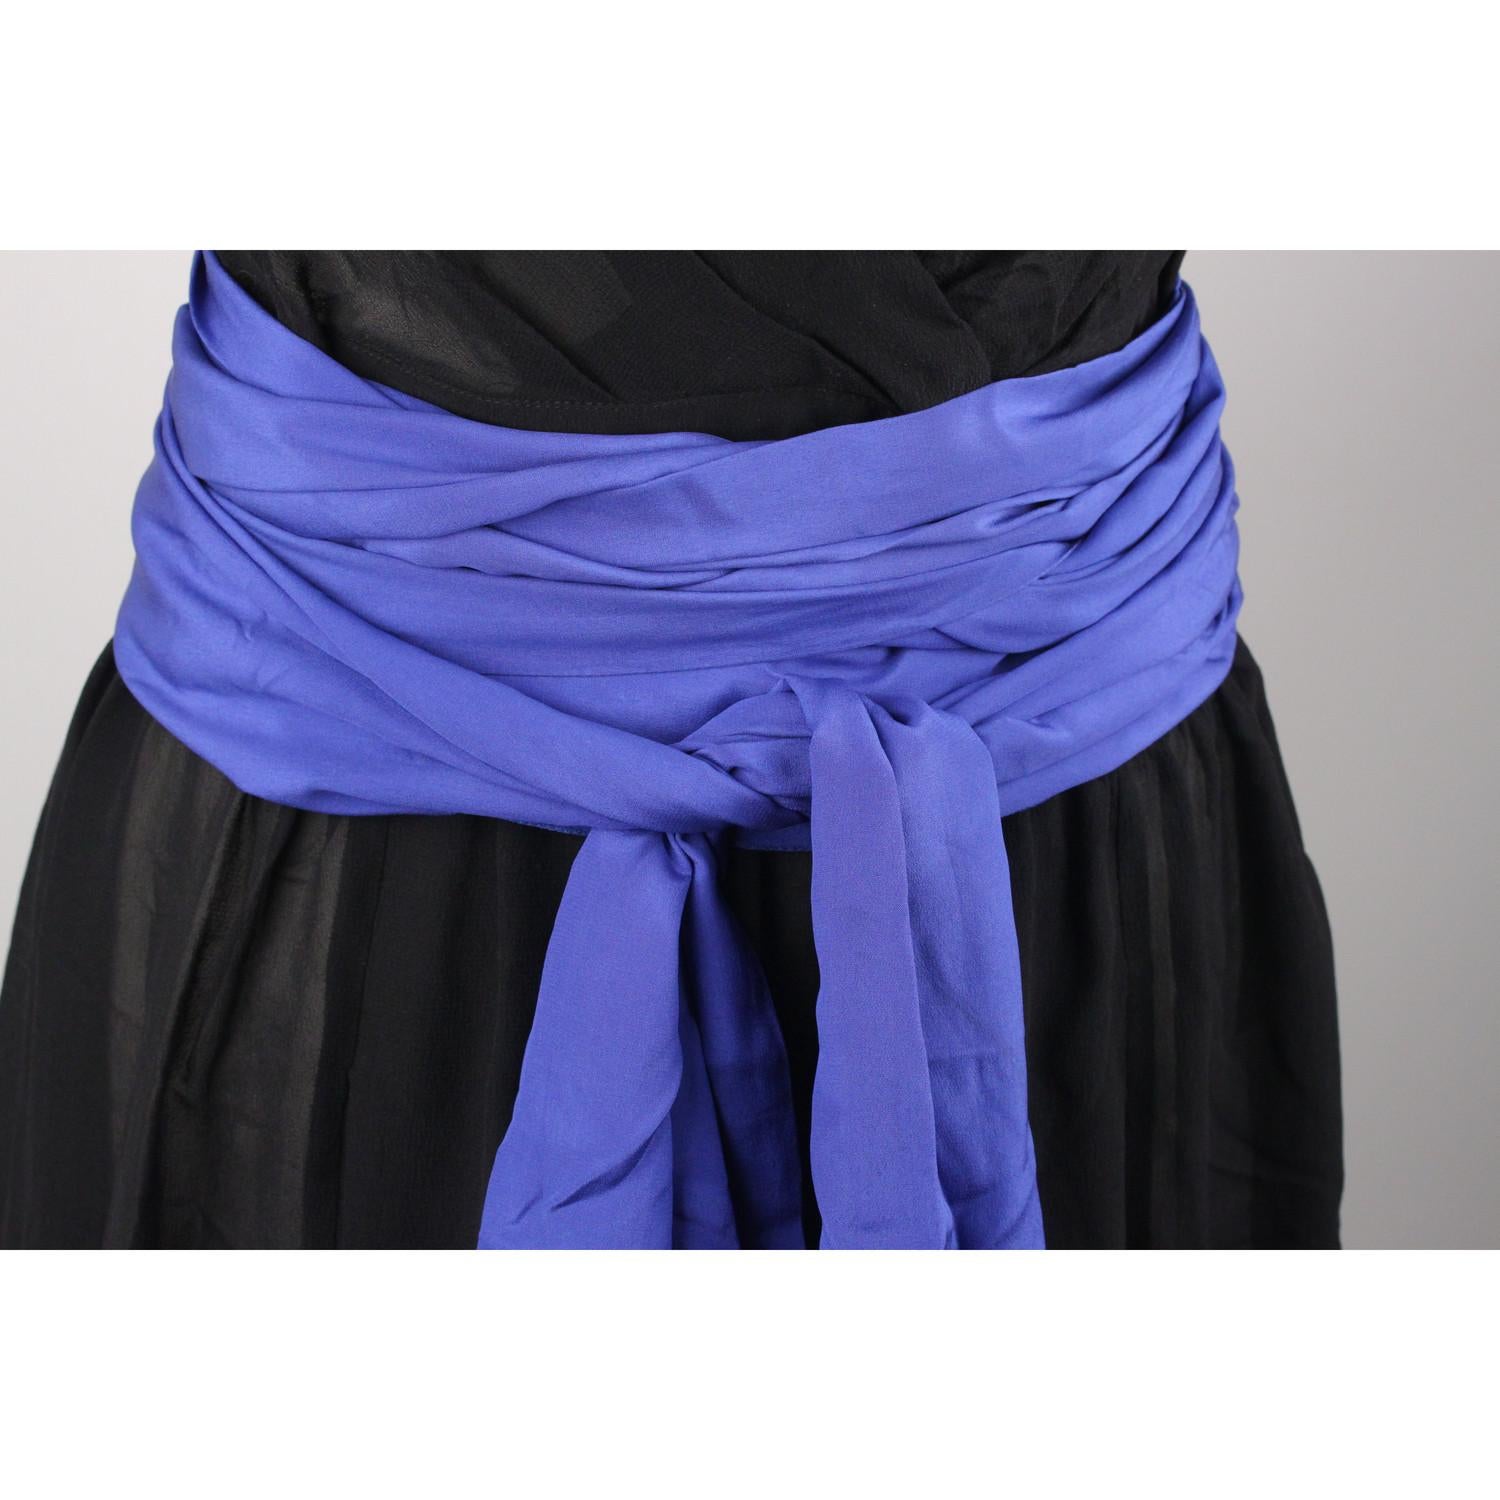 Fendi Black Silk Sleeveless Dress with Blue Belt Size 44 IT 2